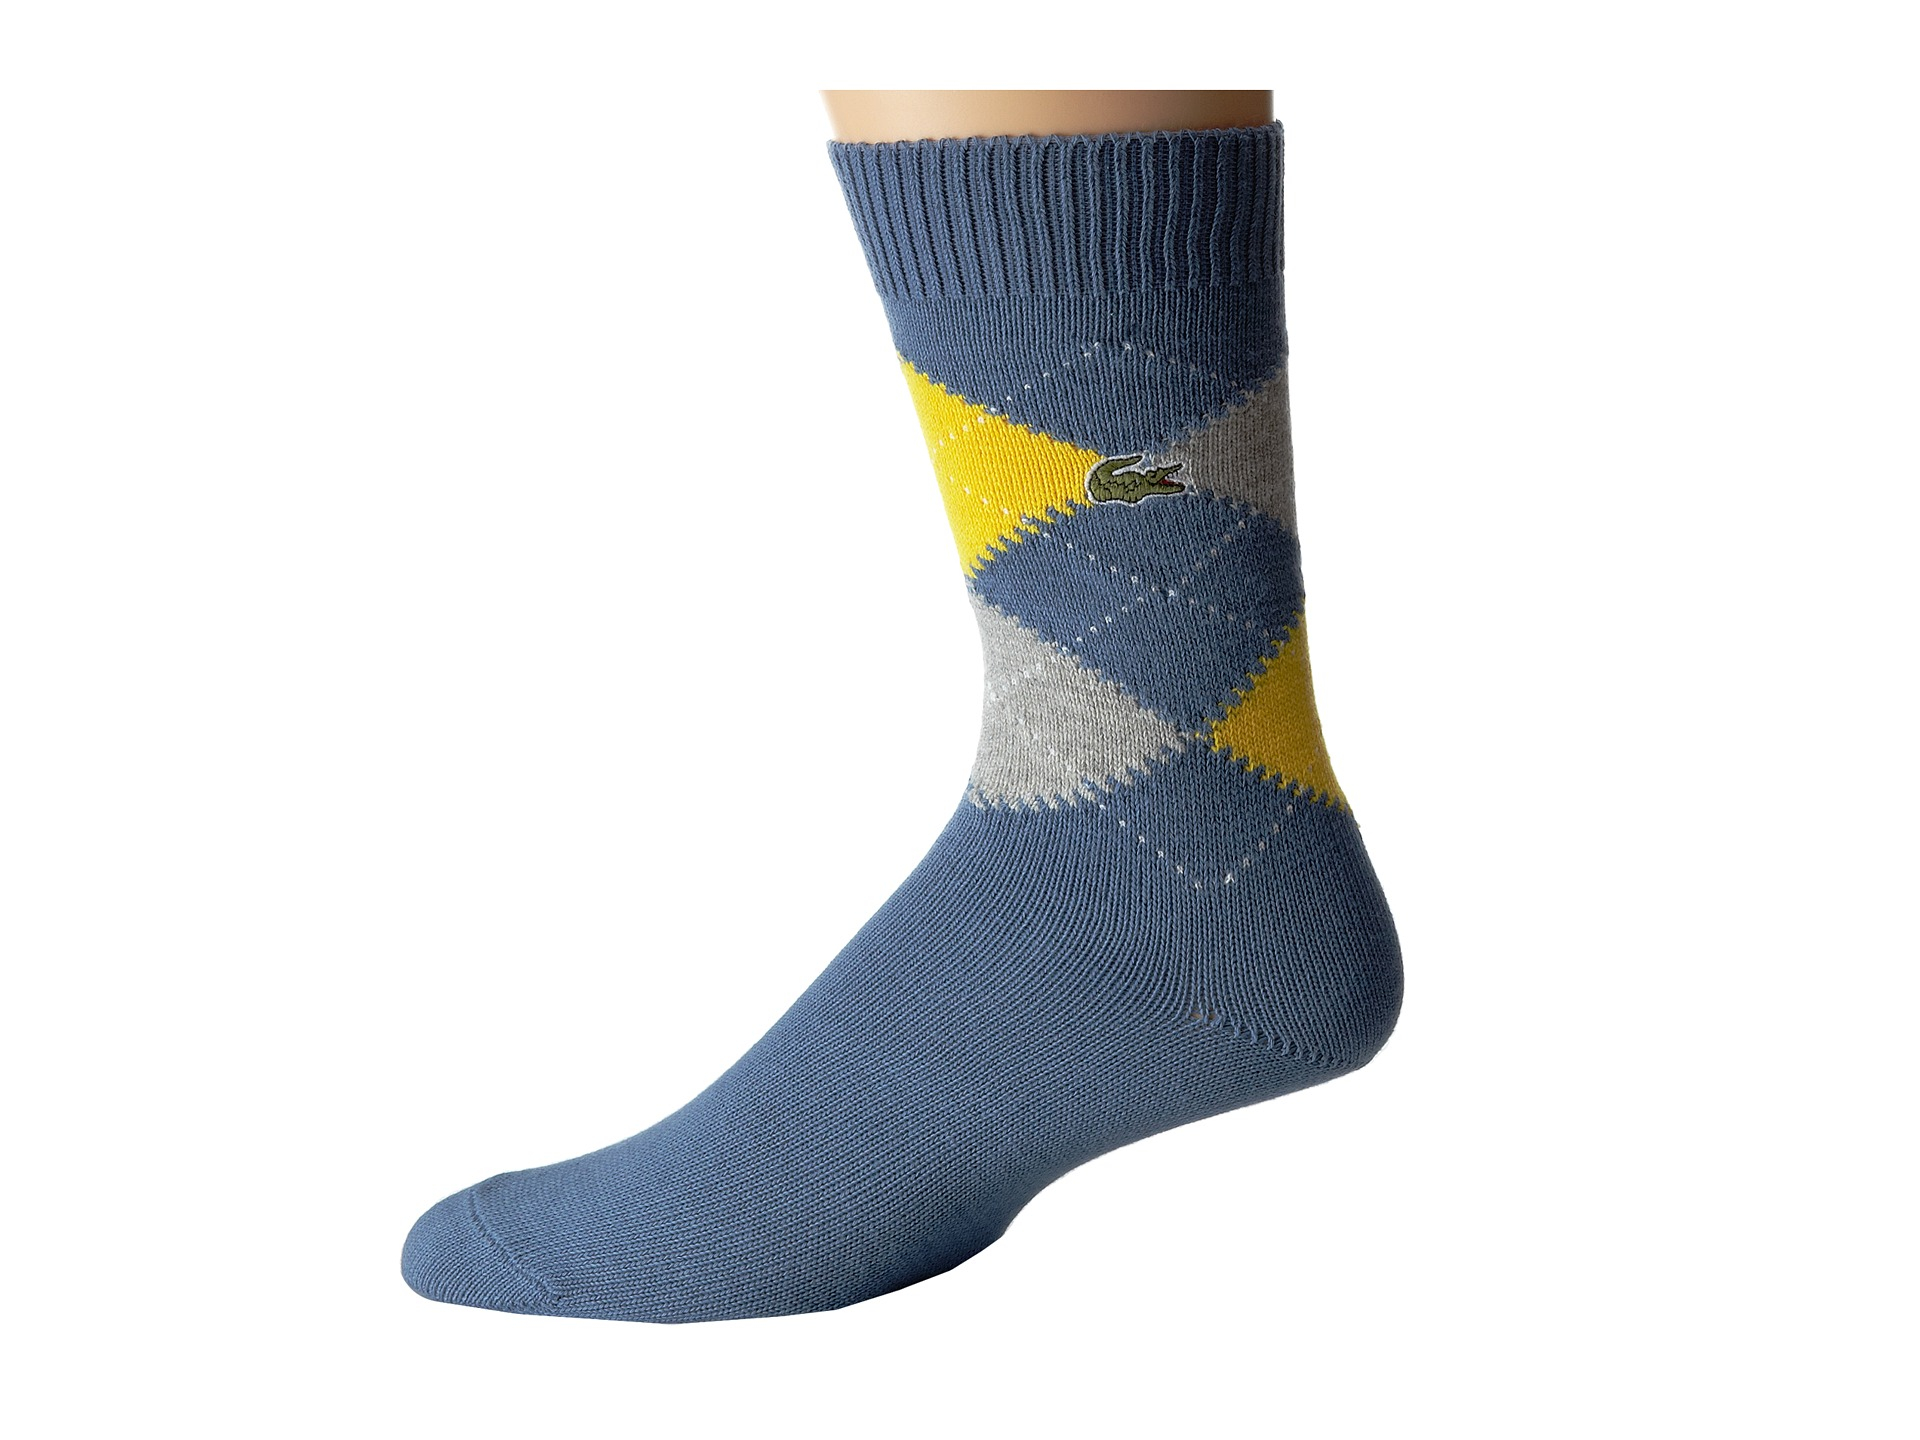 Lyst - Lacoste Argyle Sock in Blue for Men